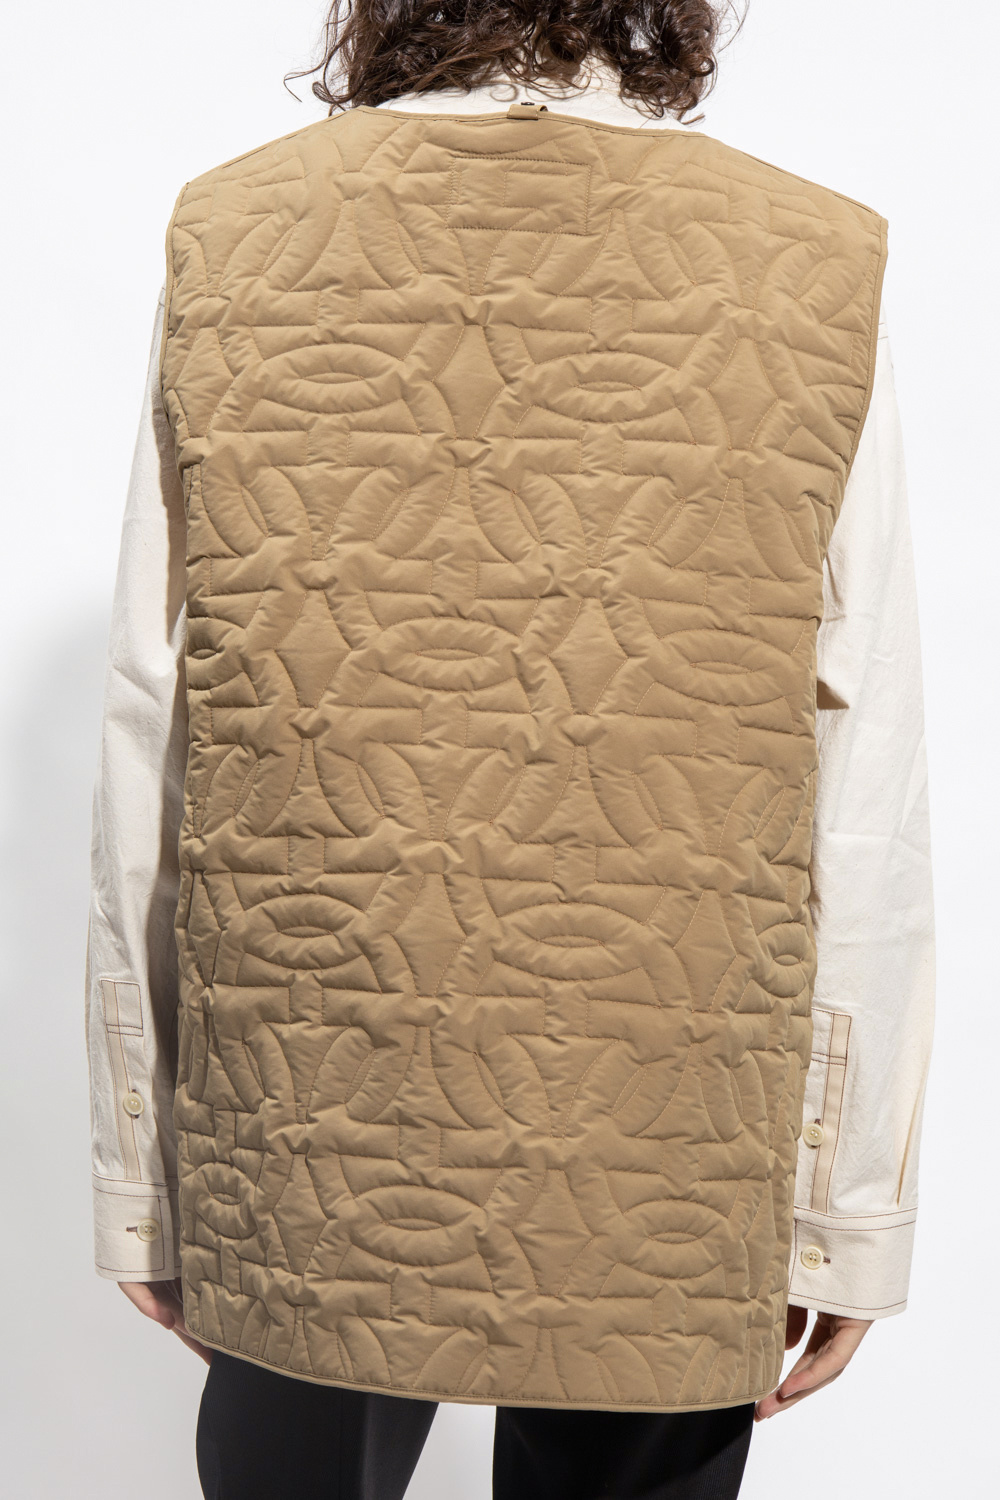 Salvatore Ferragamo Double-layered jacket